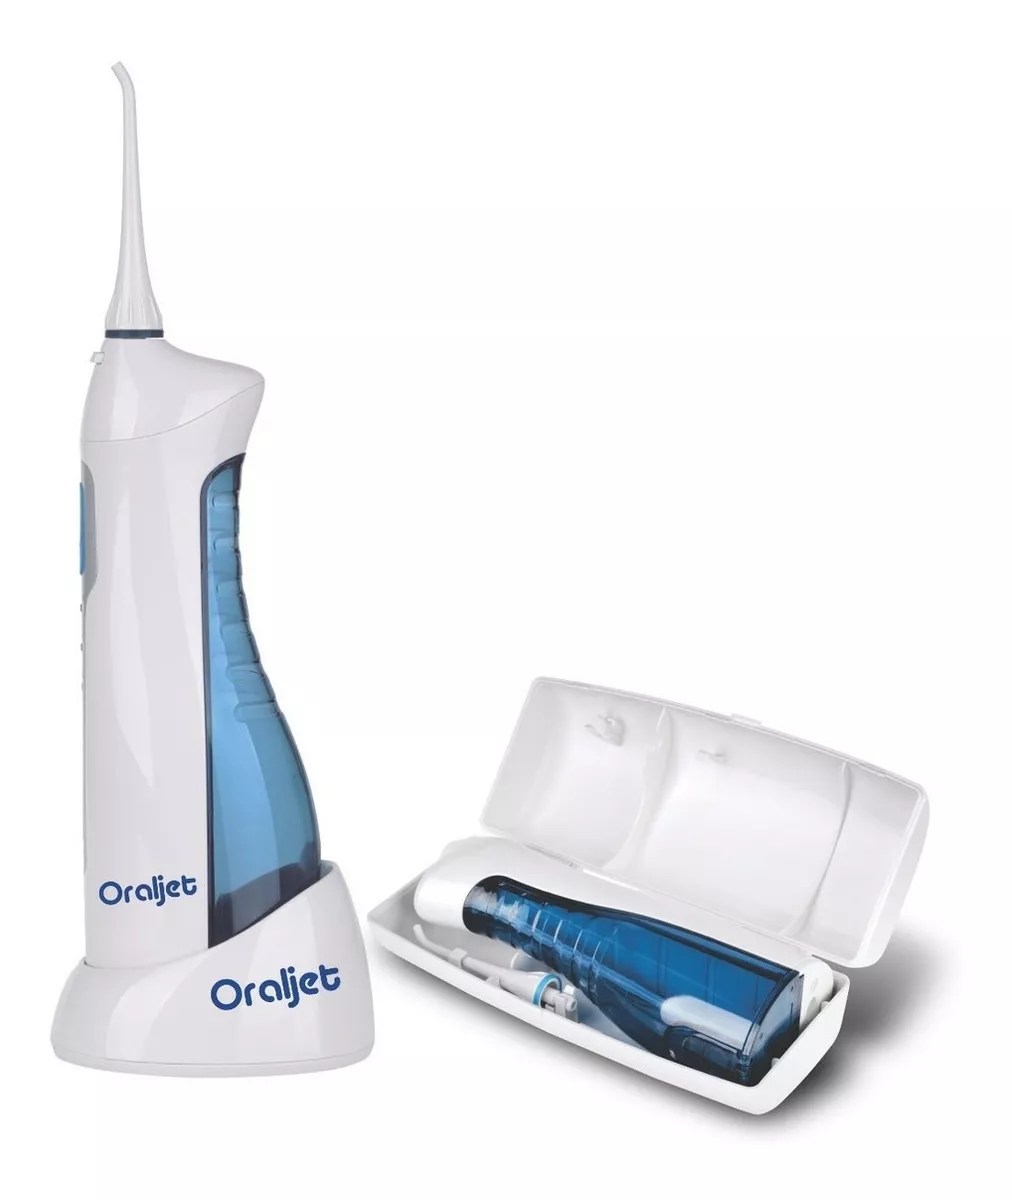 Irrigador Oral Oraljet Oj-750b Branco E Azul 100v/240v